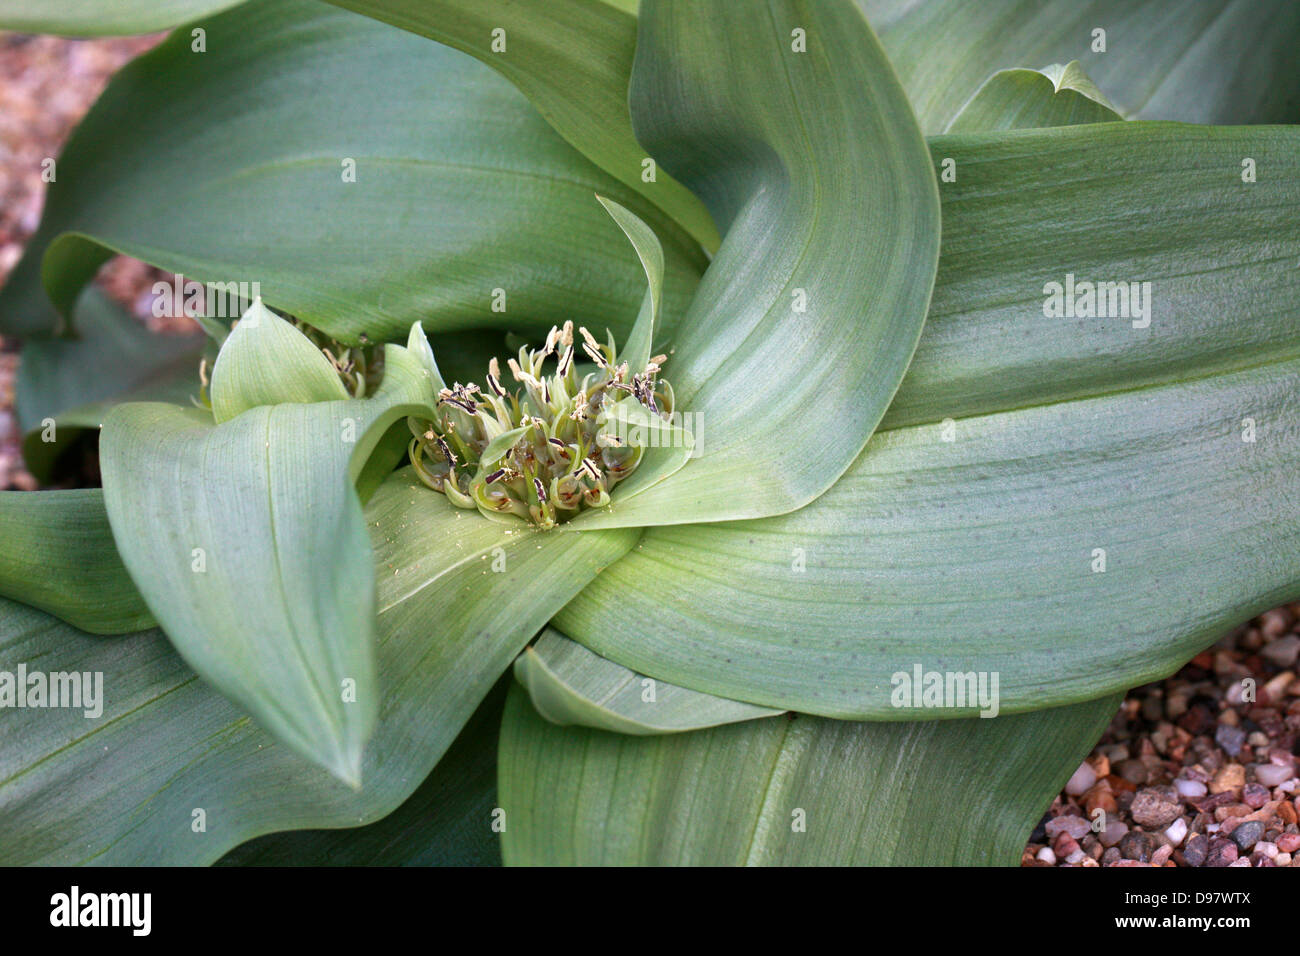 Androcymbium vanjaarsveldii, Colchicaceae. South Africa. Stock Photo